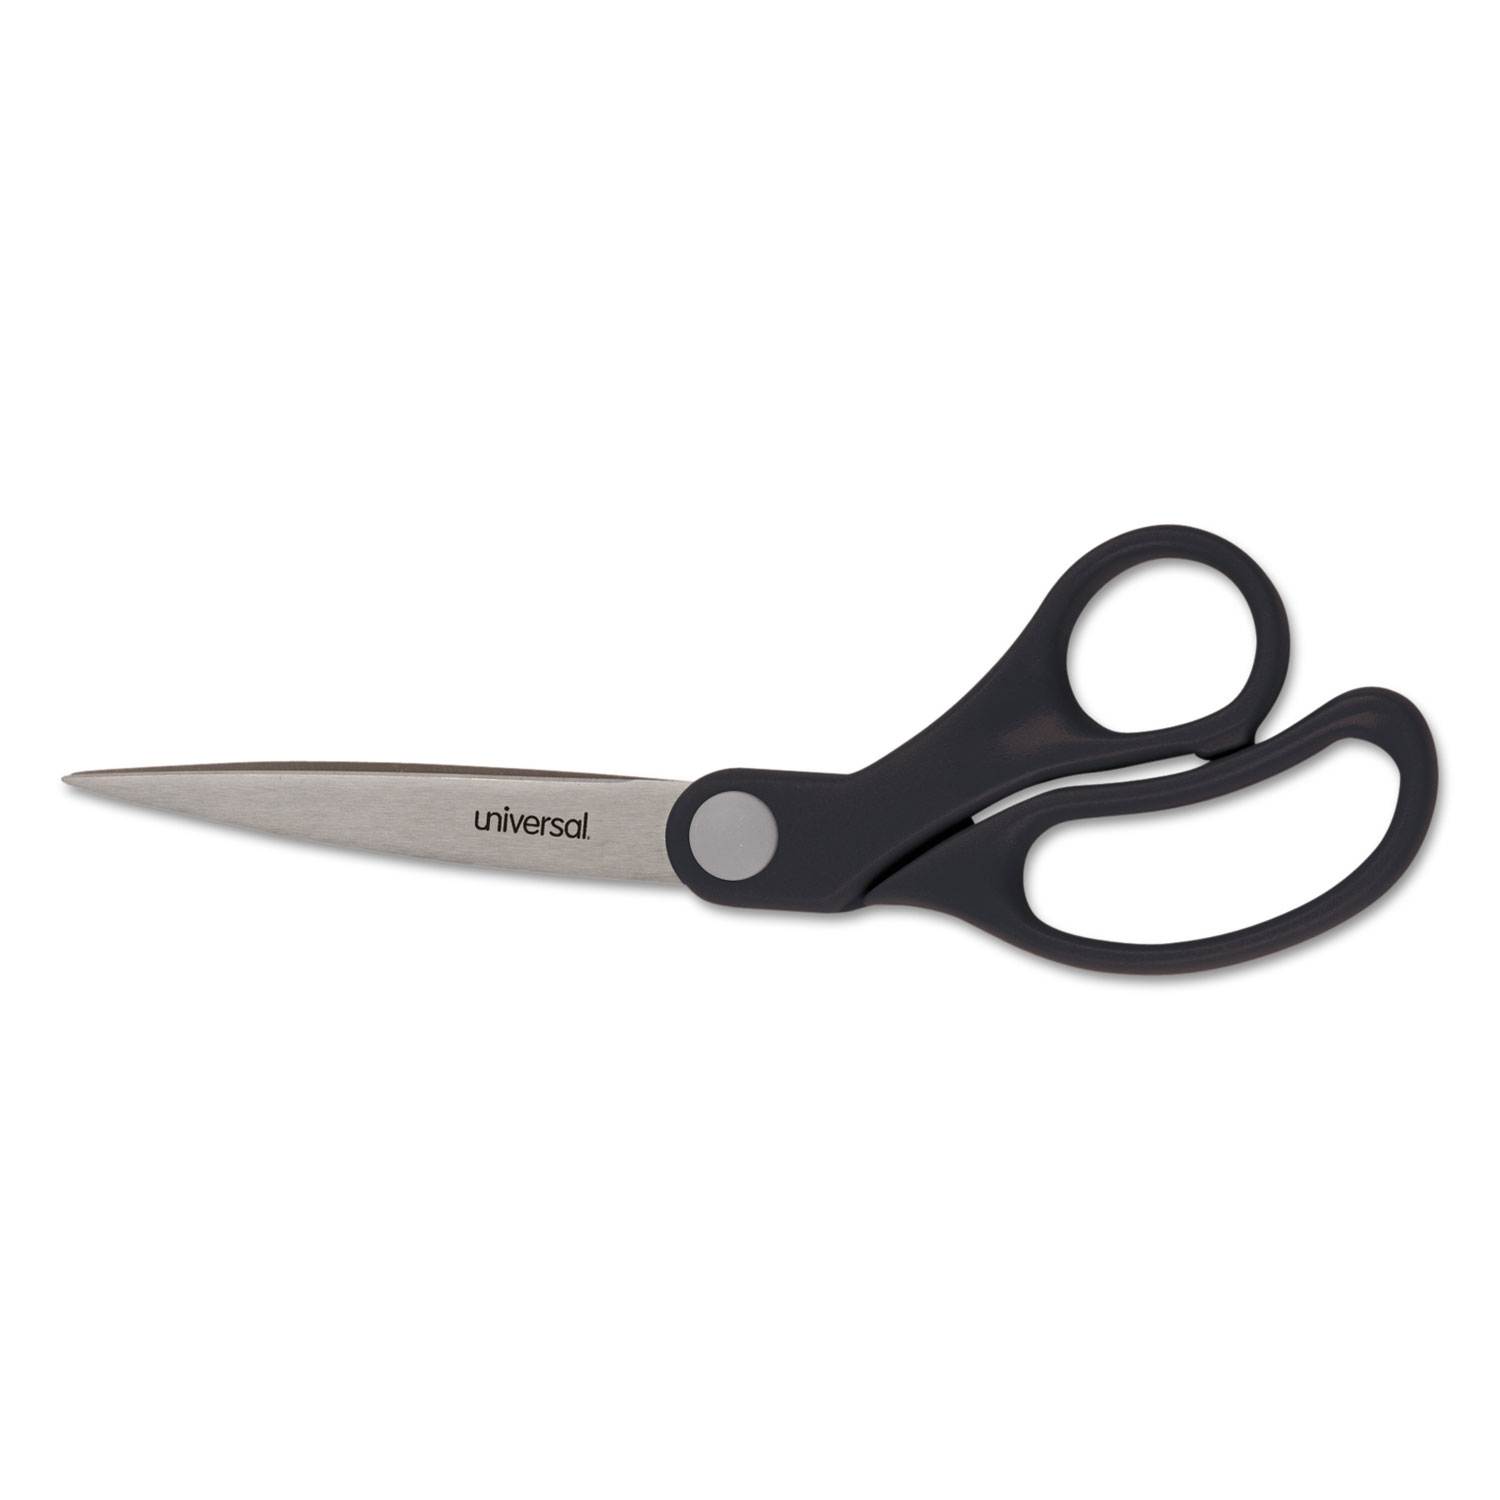  Universal UNV92010 Stainless Steel Office Scissors, 8.5 Long, 3.75 Cut Length, Black Offset Handle (UNV92010) 